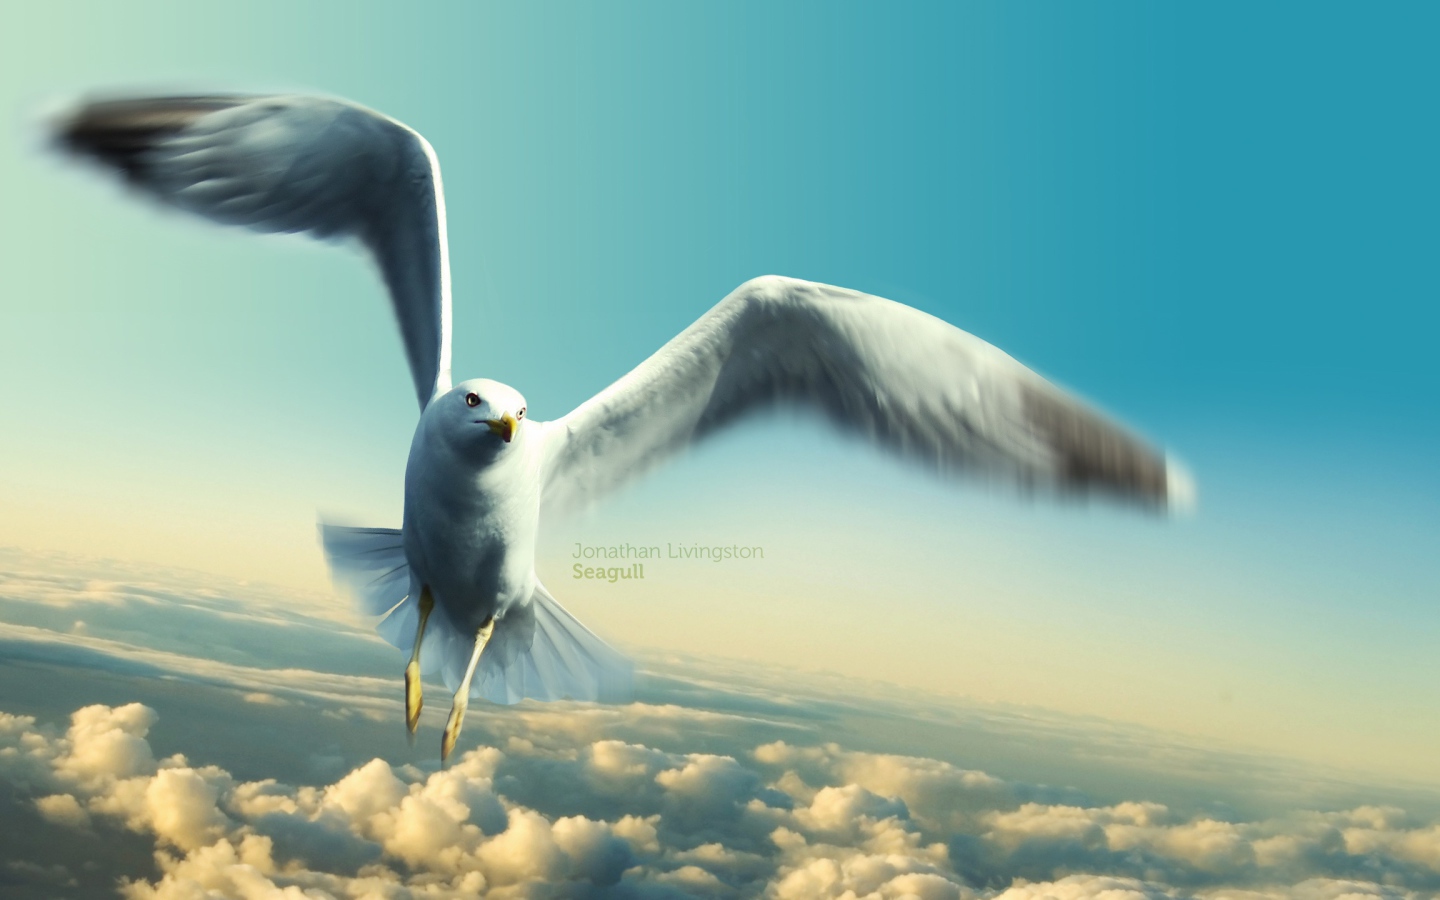 Jonathan livingston seagull